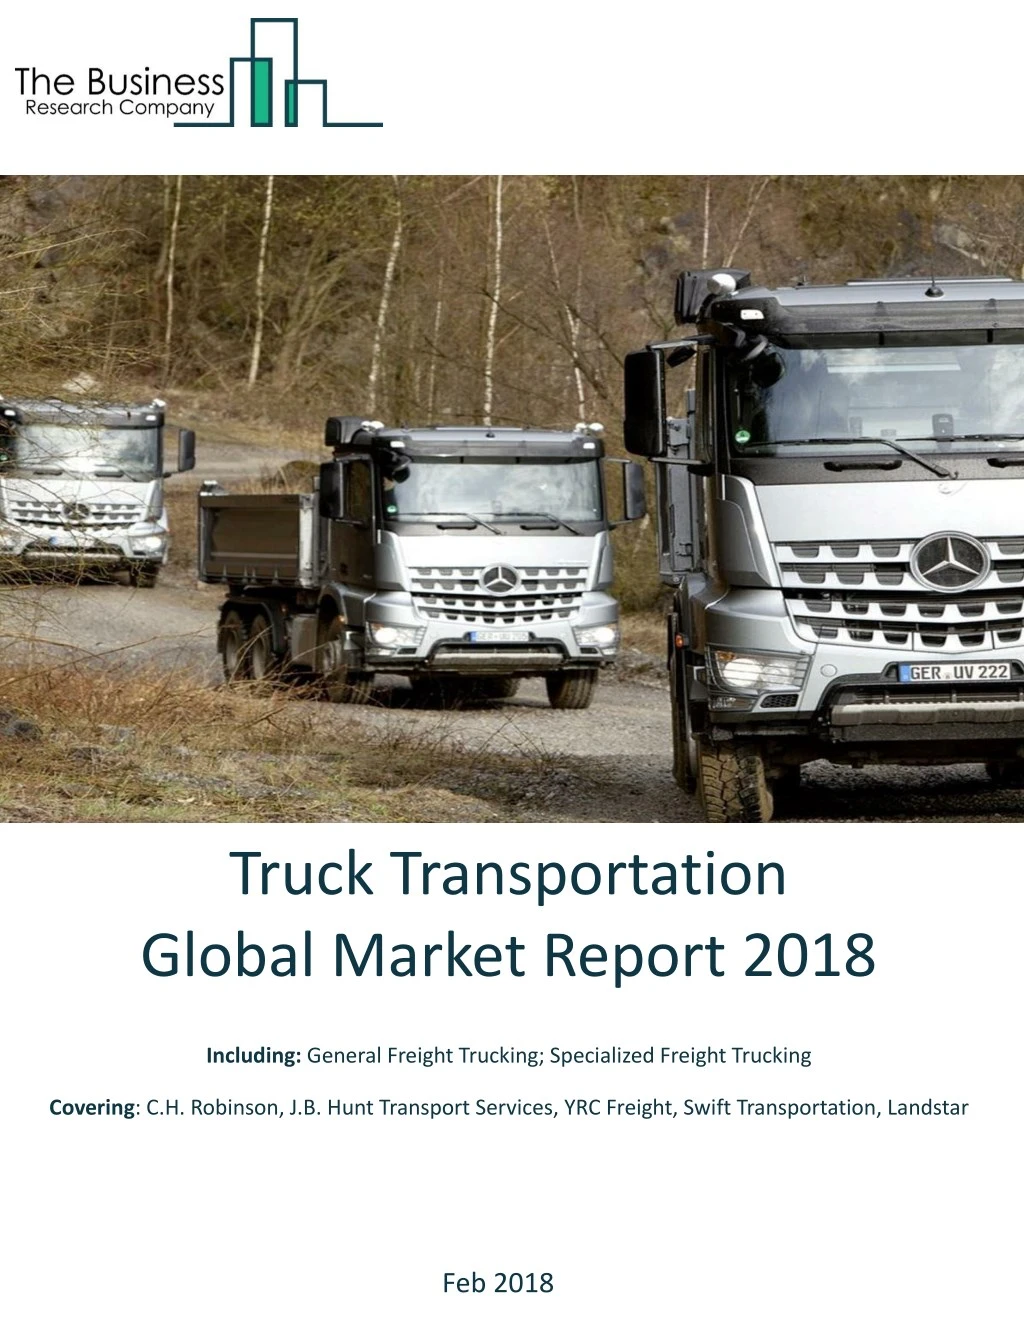 truck transportation global market report 2018